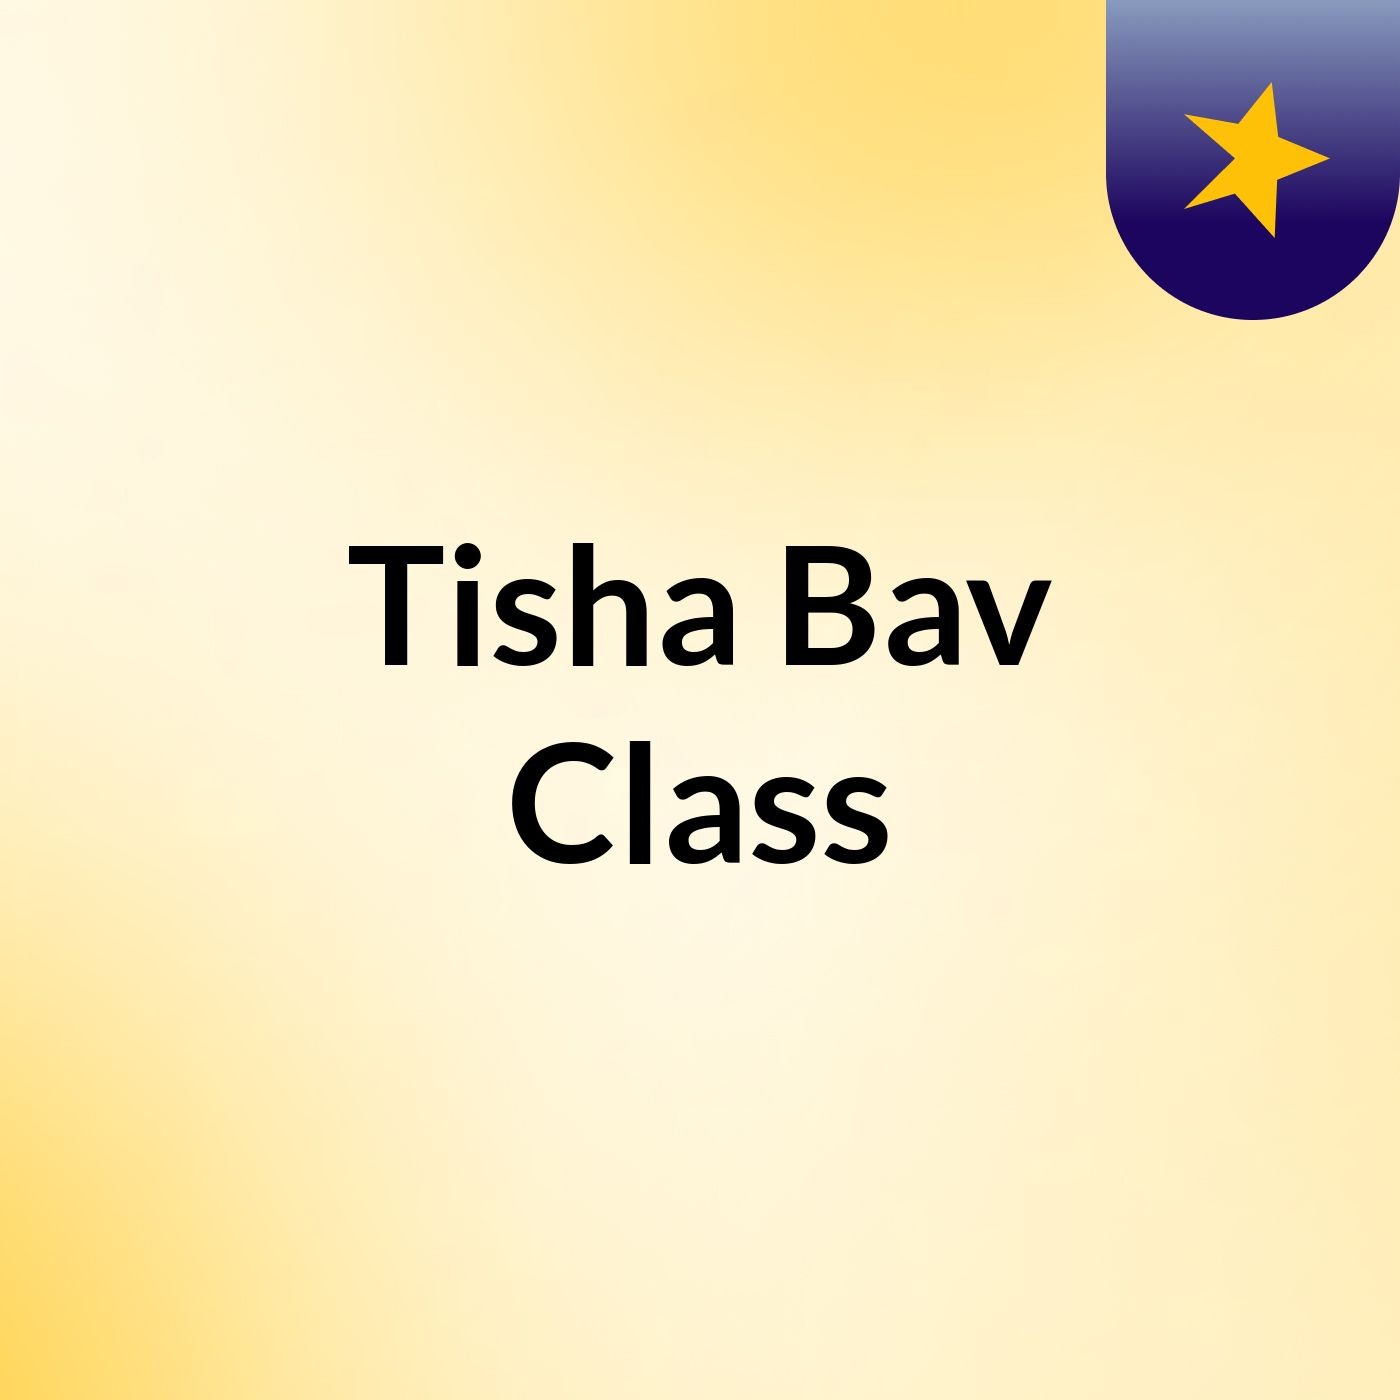 Episode 1 - Tisha Bav Class